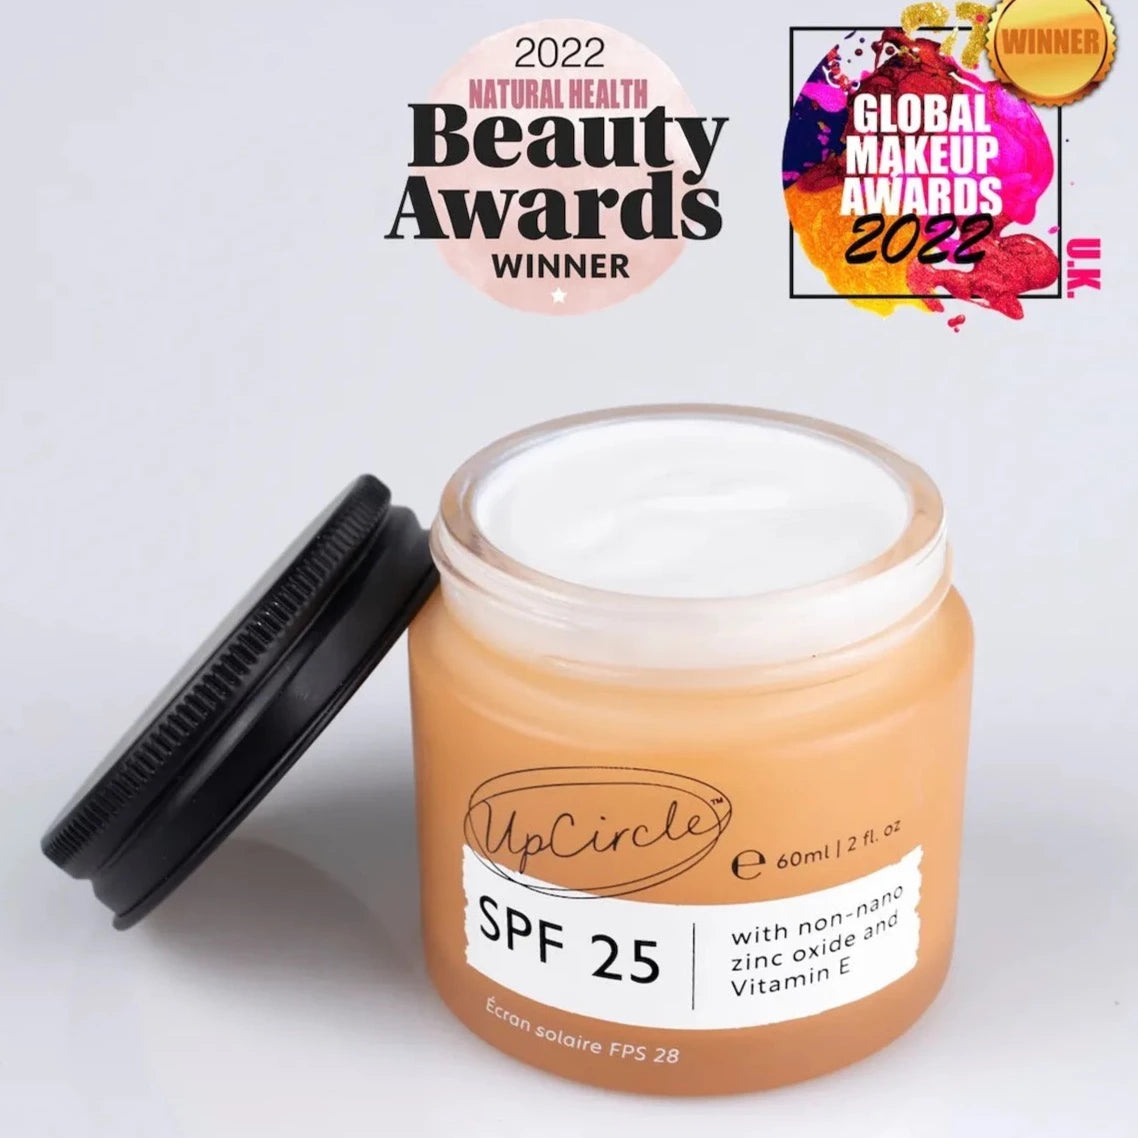 UpCircle Beauty SPF25 Mineral Sunscreen